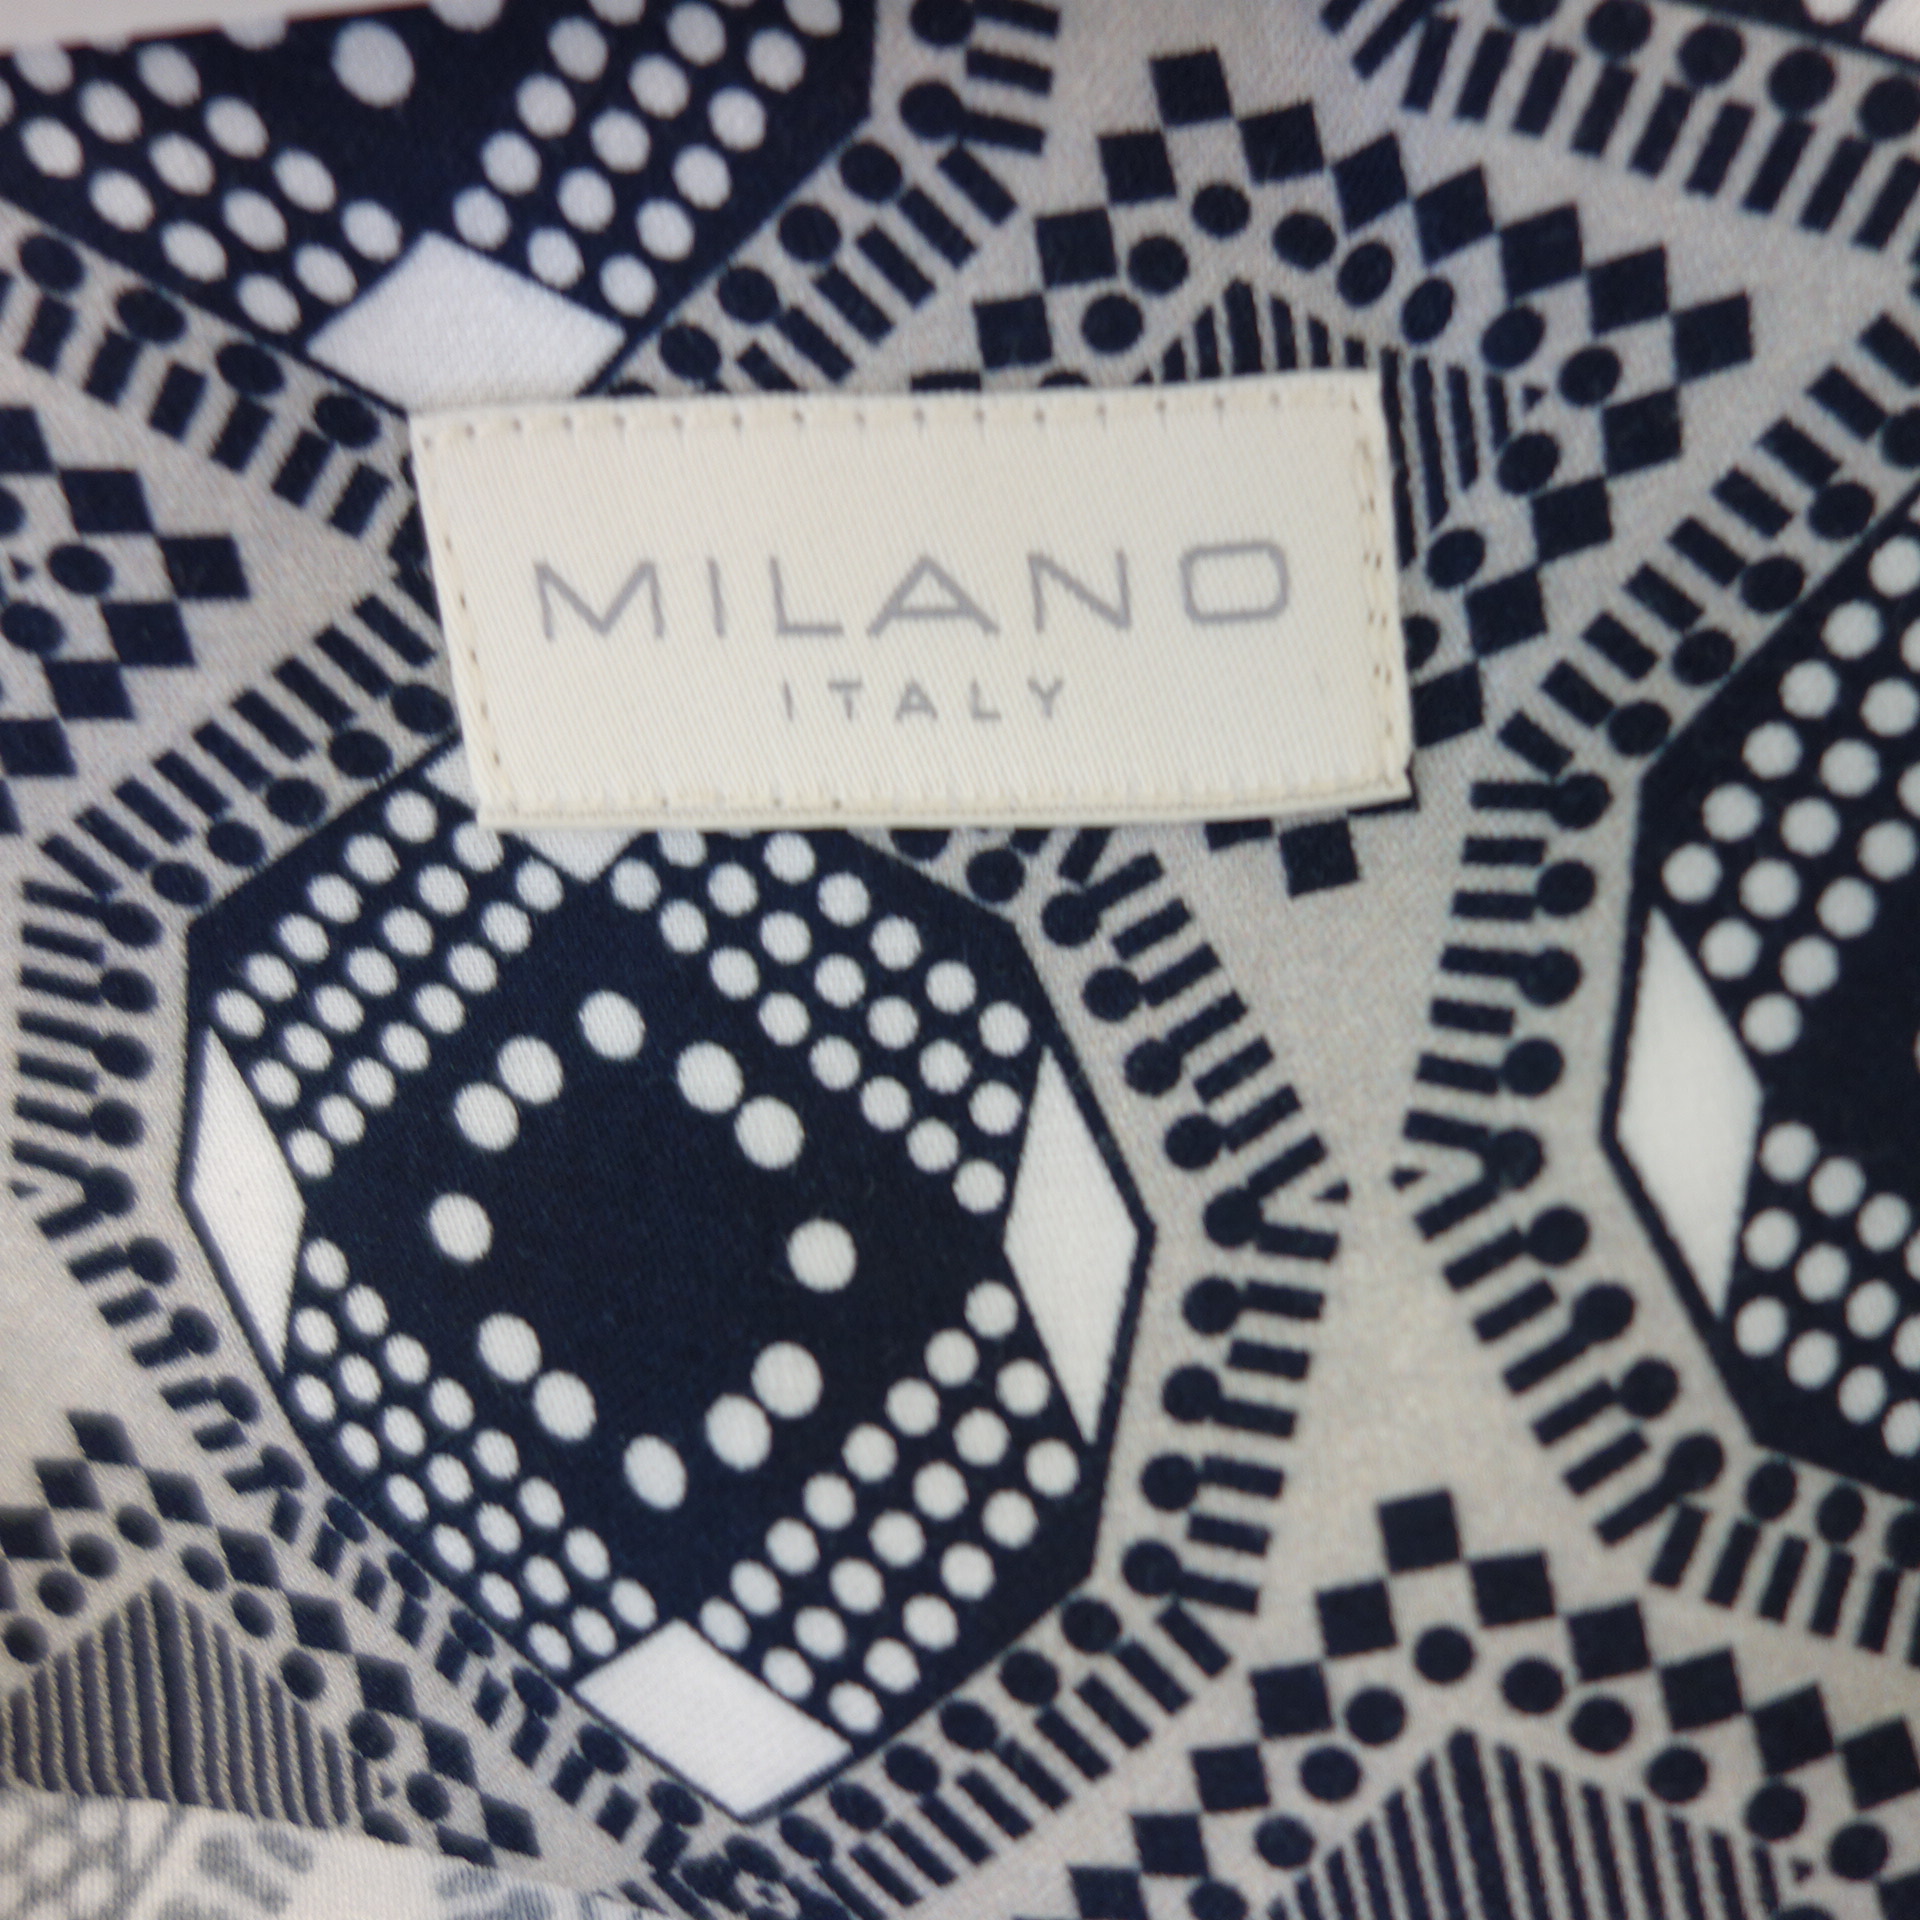 MILANO Italy Damen Bluse Tunika Oberteil Shirt Muster 100%  Viskose Np 89 Neu